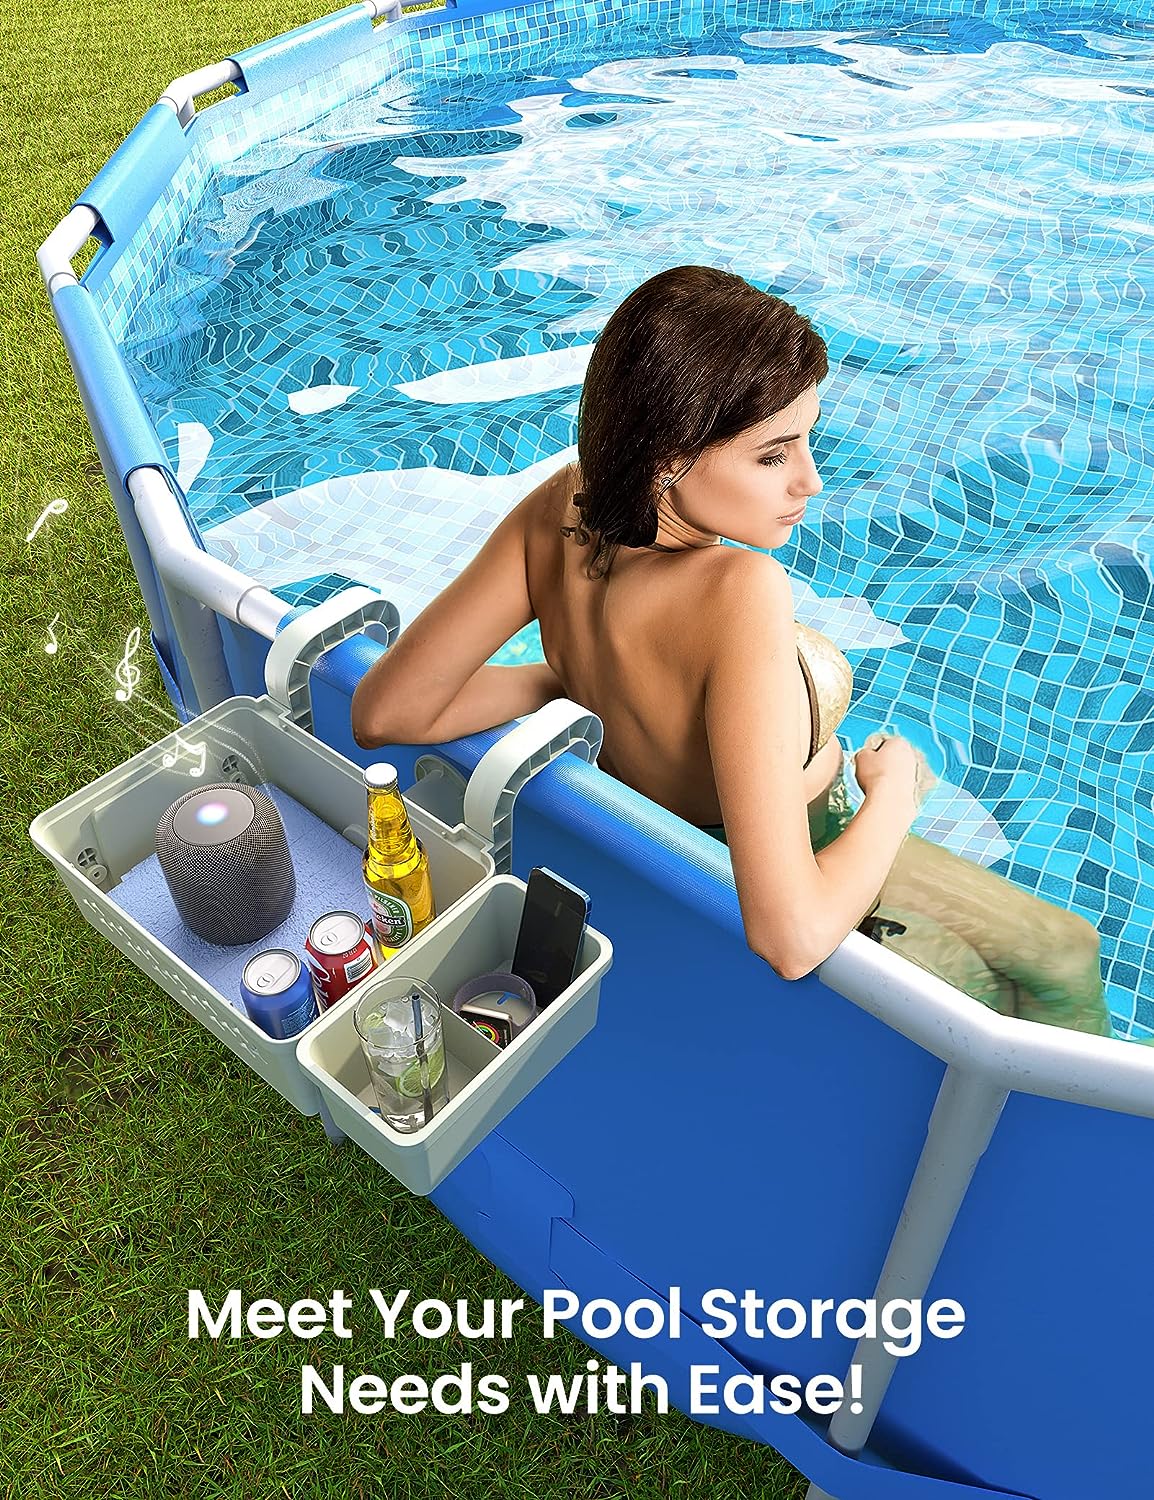 SUMMERBUDDY 2 Sets Poolside Storage Basket Review